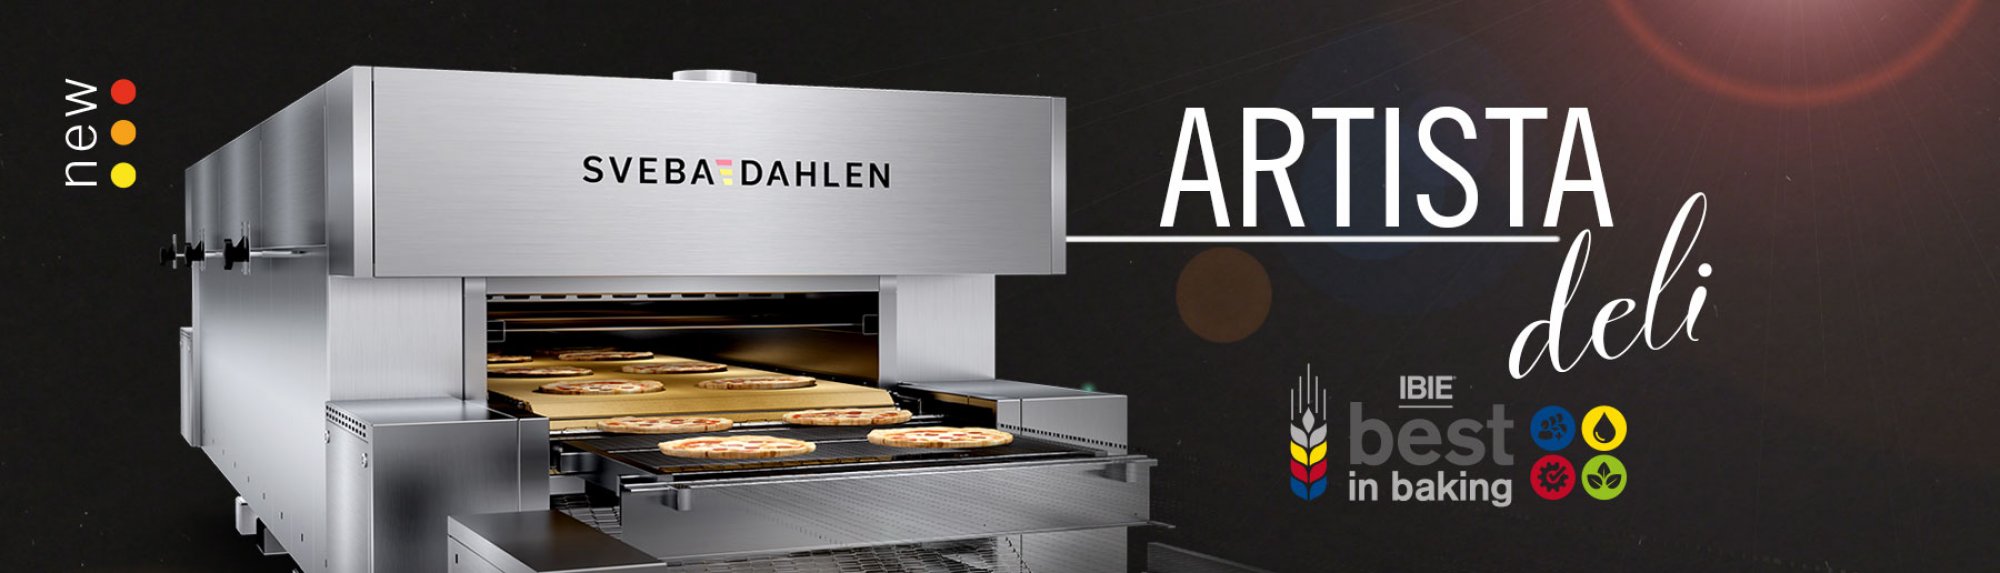 Tunnel Oven Artista Deli pizza bread bakery launch IBIE best in baking Sveba Dahlen Middleby NEW